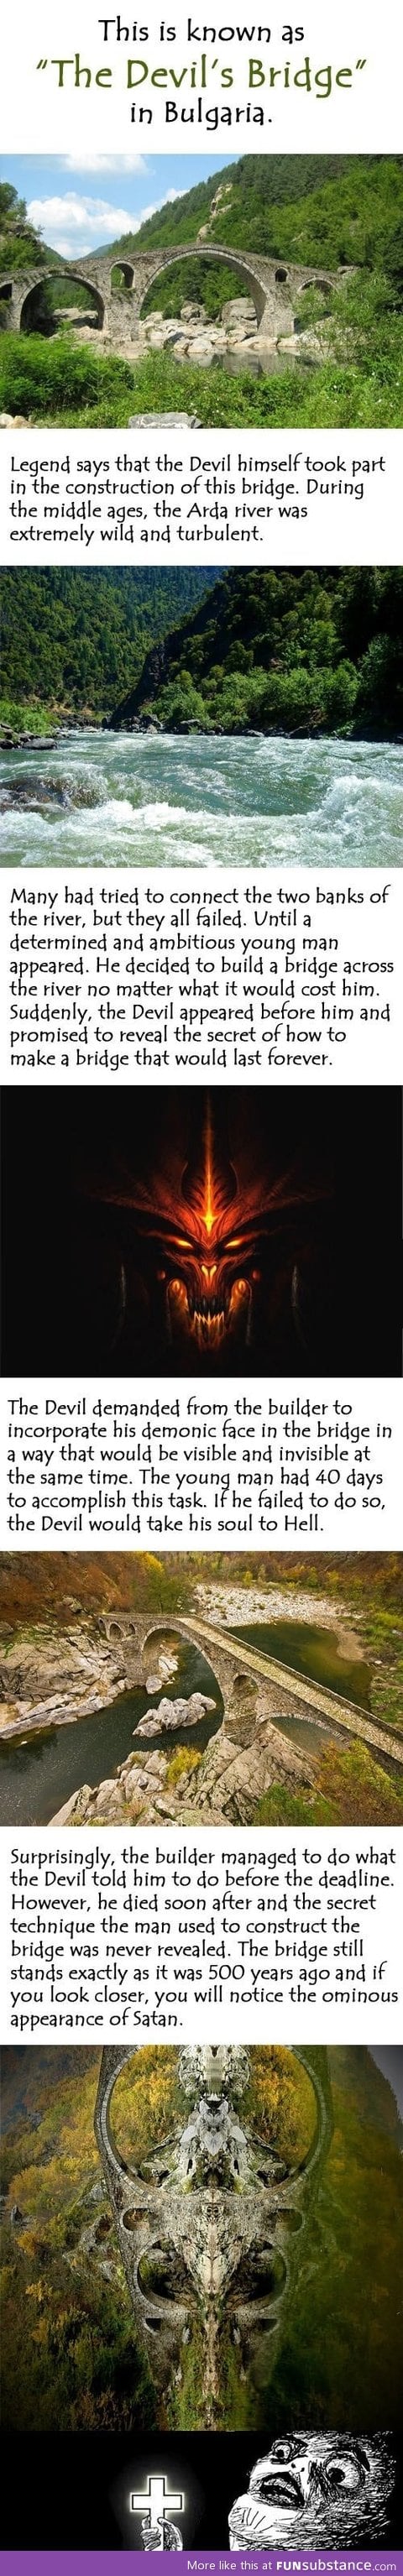 The devil’s bridge